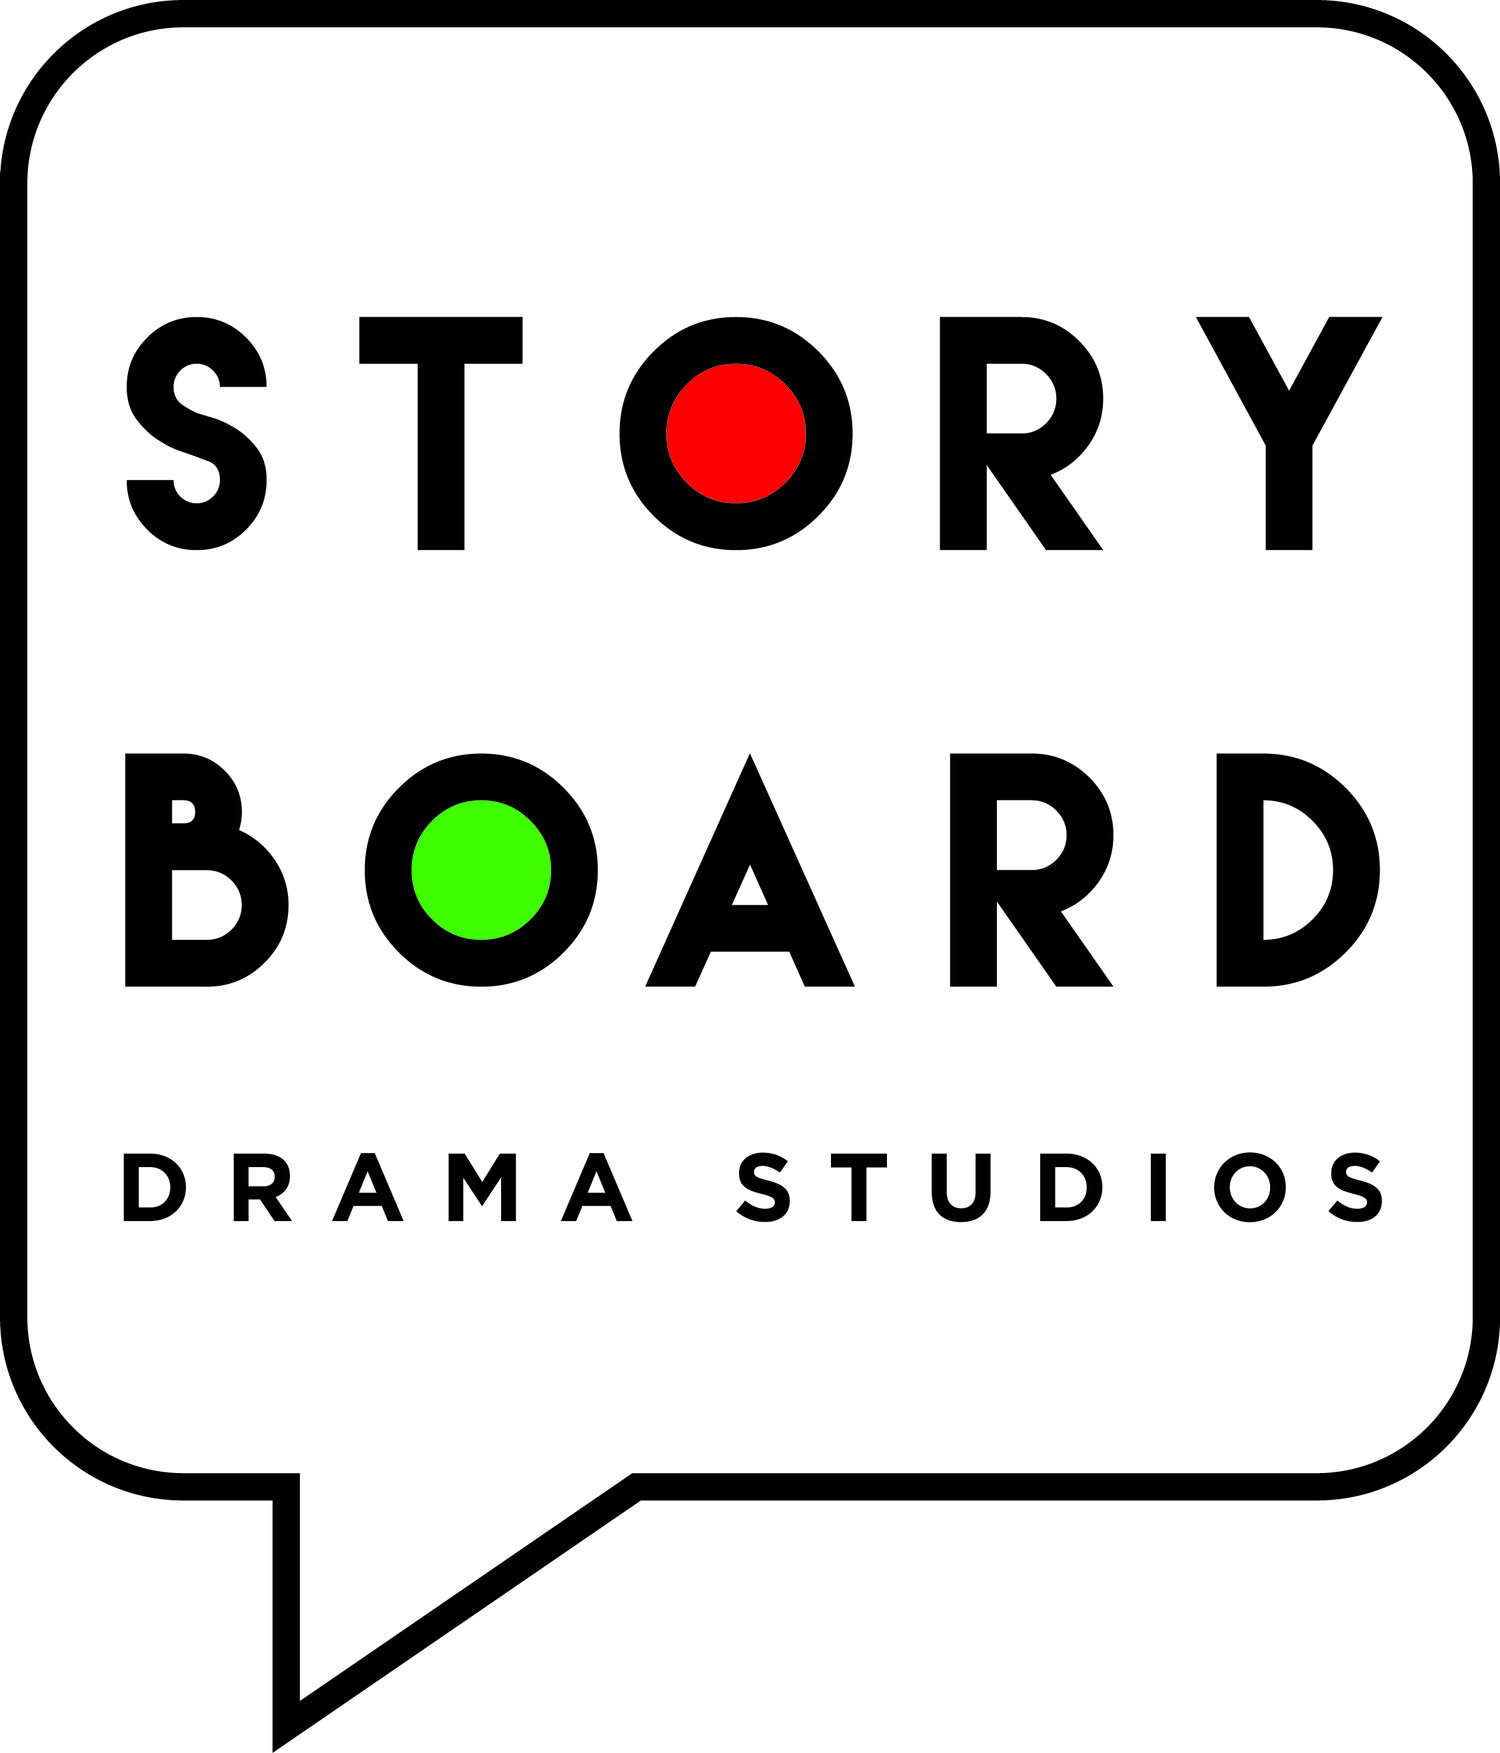 Storyboard Drama Studios